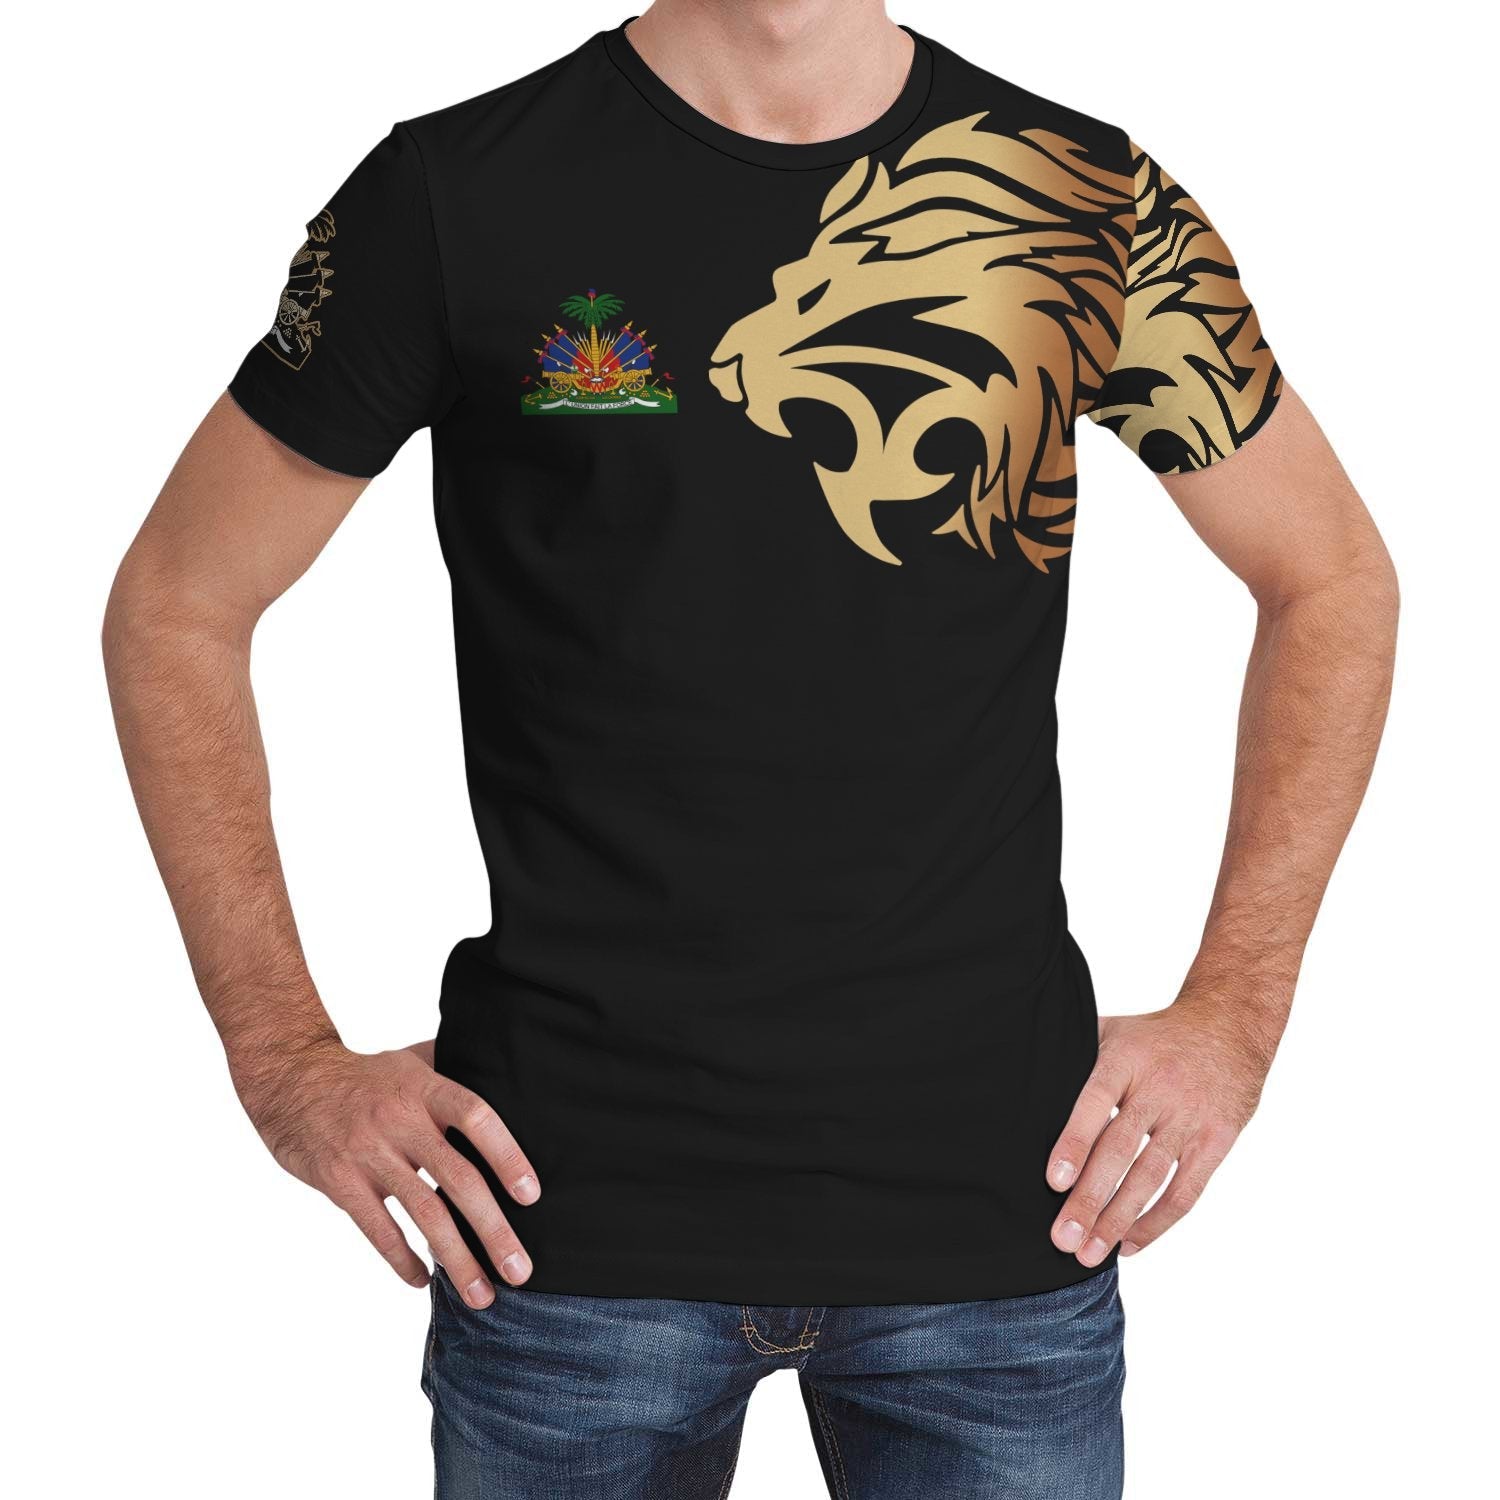 haiti-t-shirts-lion-style